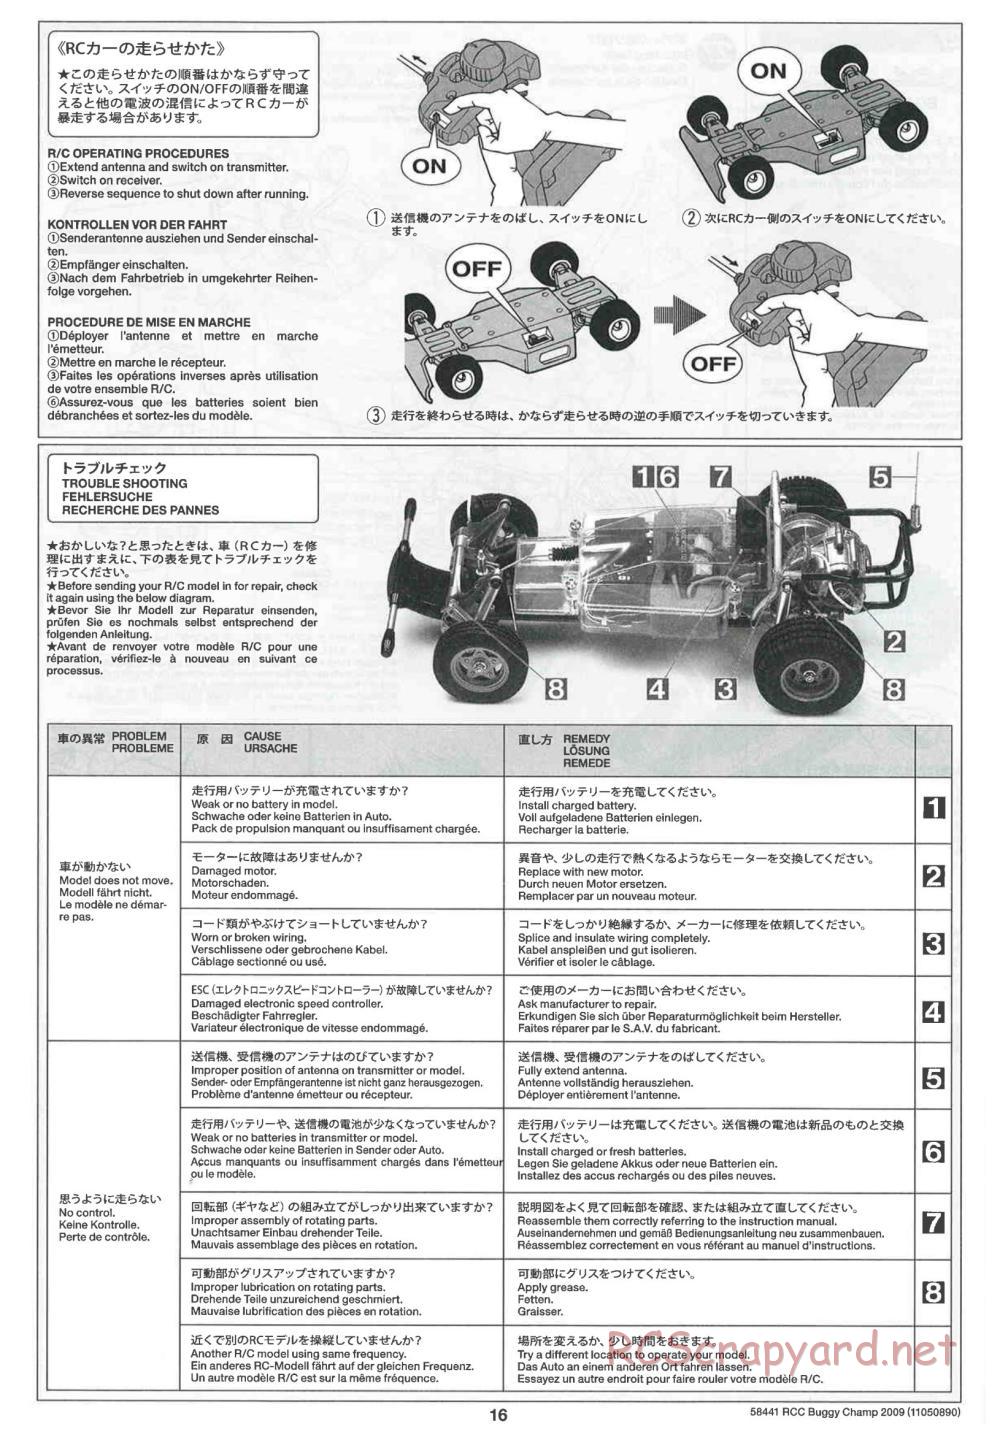 Tamiya - Buggy Champ Chassis - Manual - Page 16